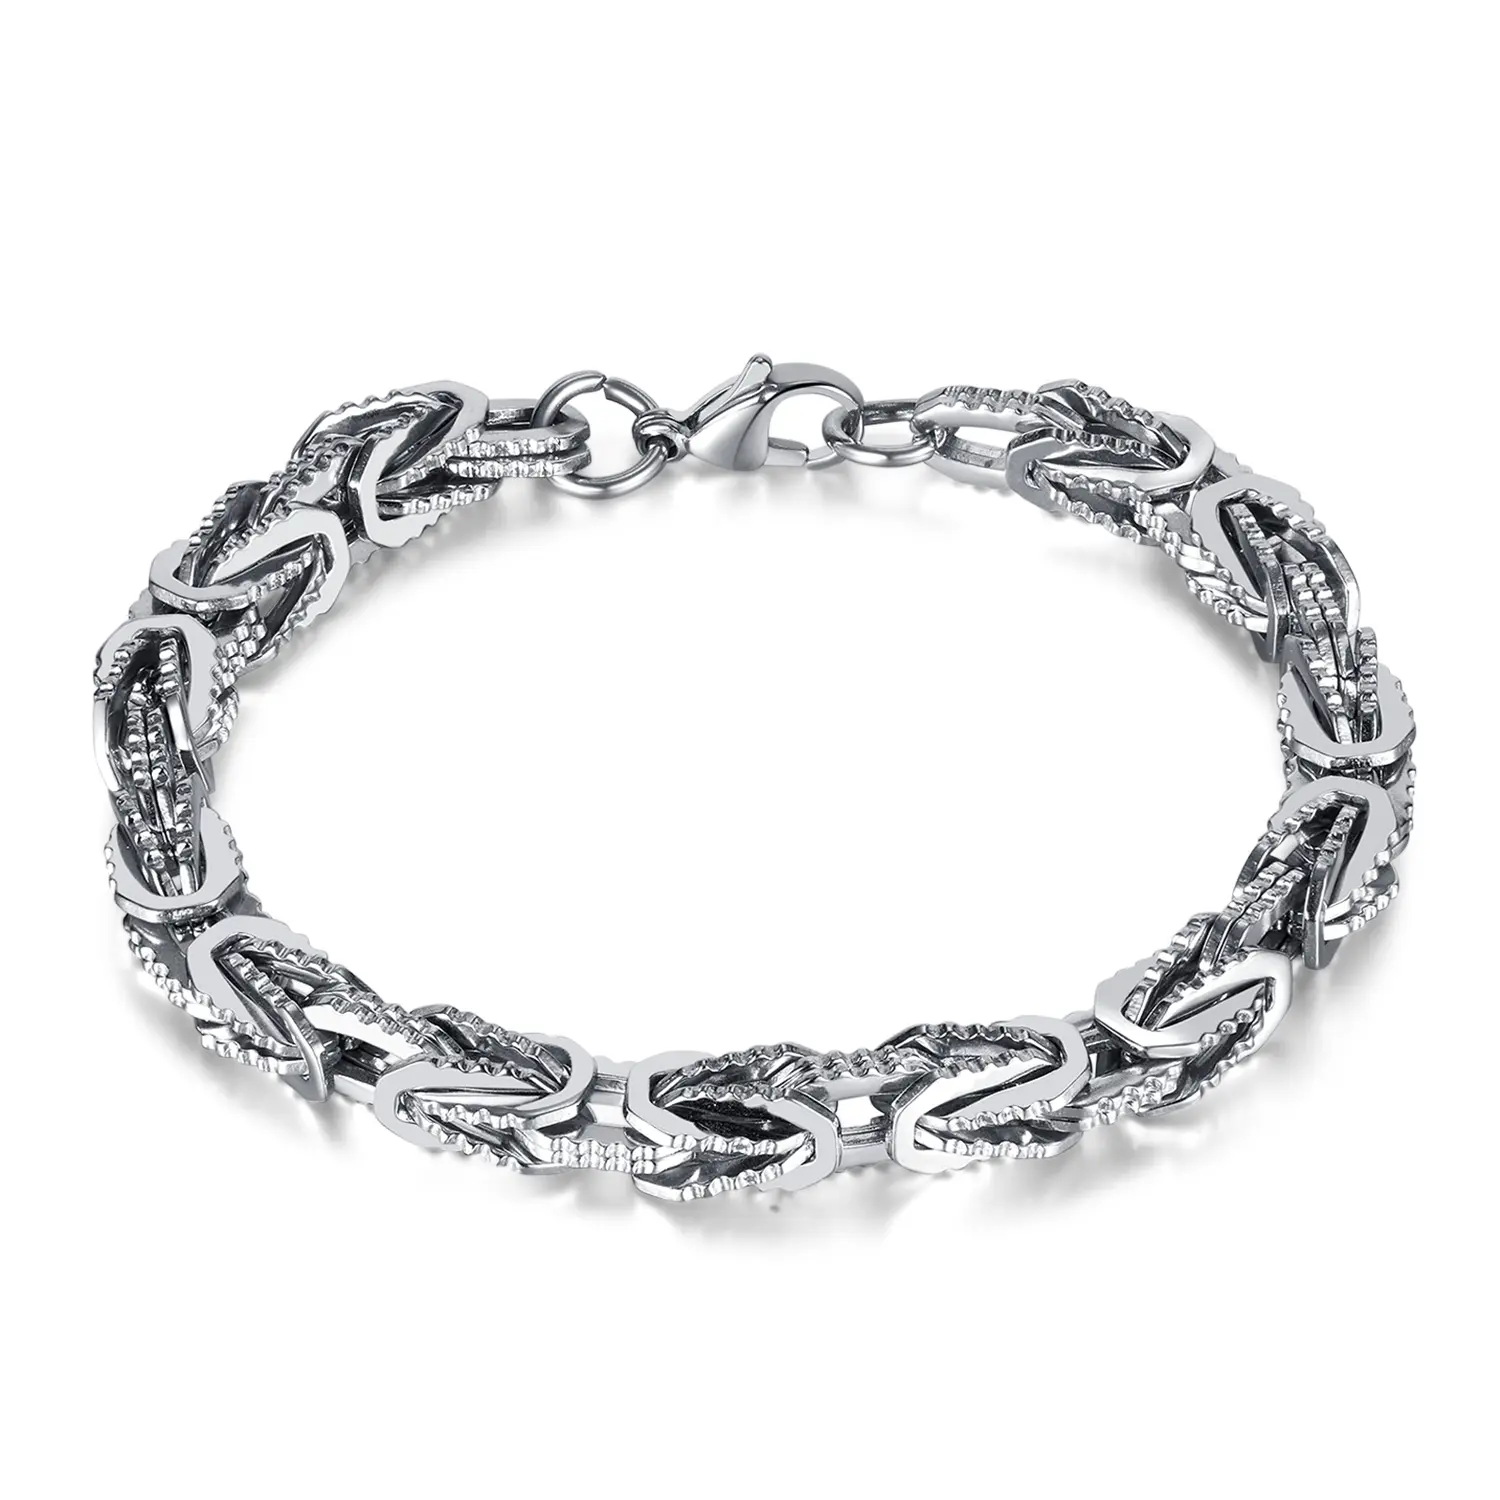 New Product Bangle Bracelet Stainless Steel Hook Buckle Wristbands Silver zigzag Chain fashion jewelry Bracelets men